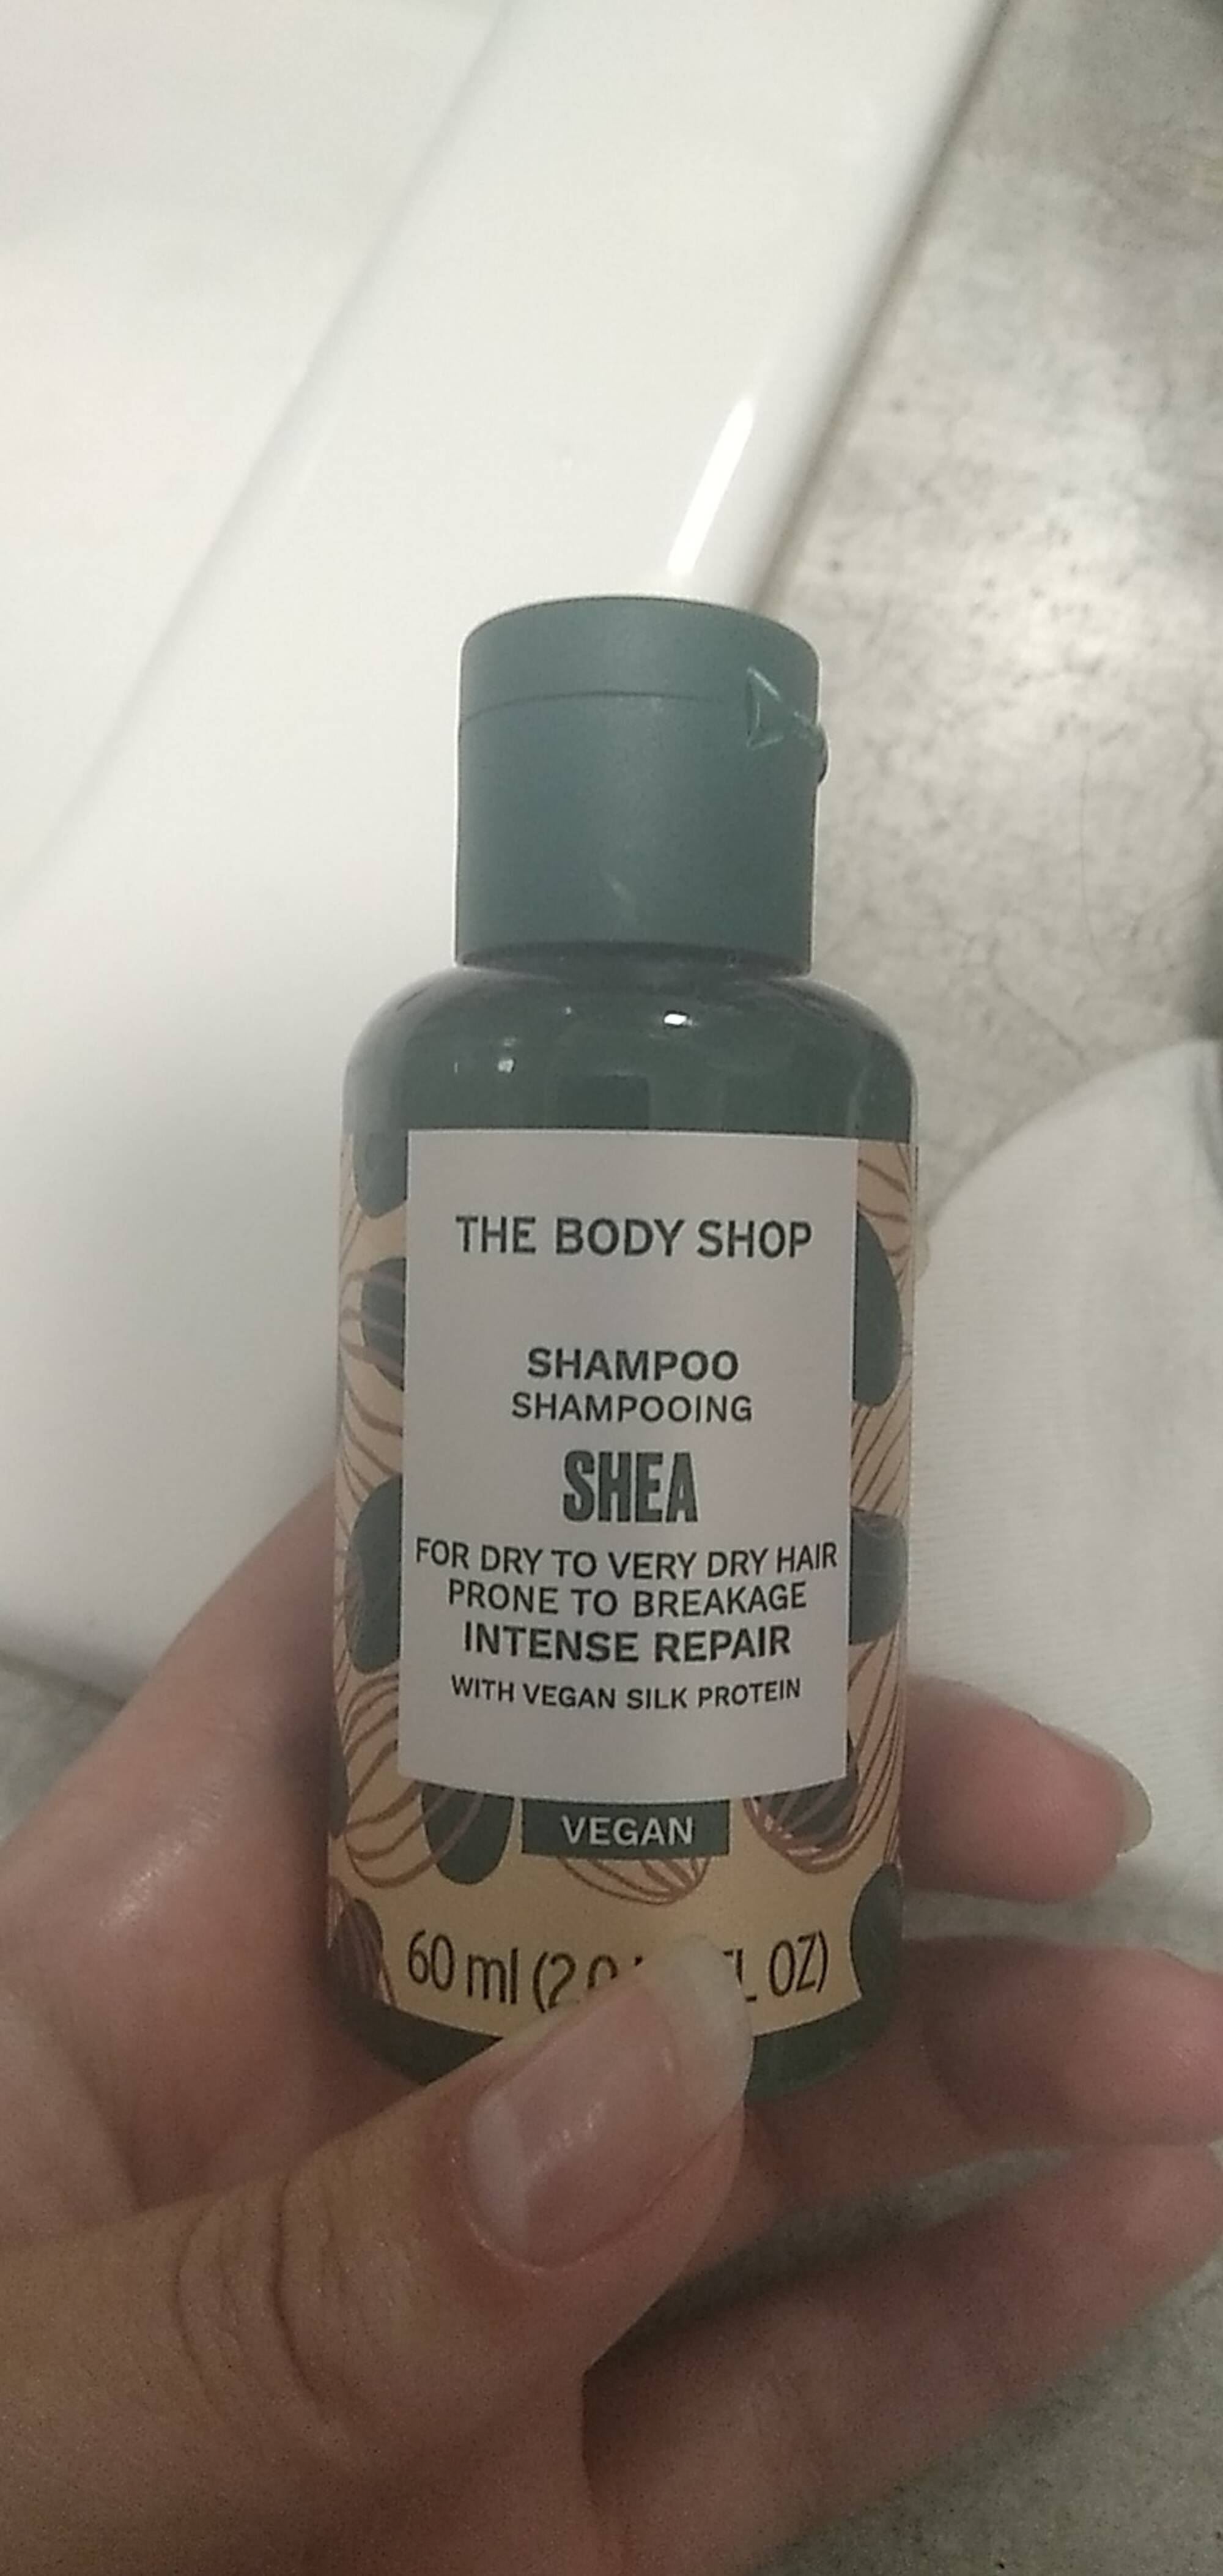 THE BODY SHOP - Shampooing shea intense repair